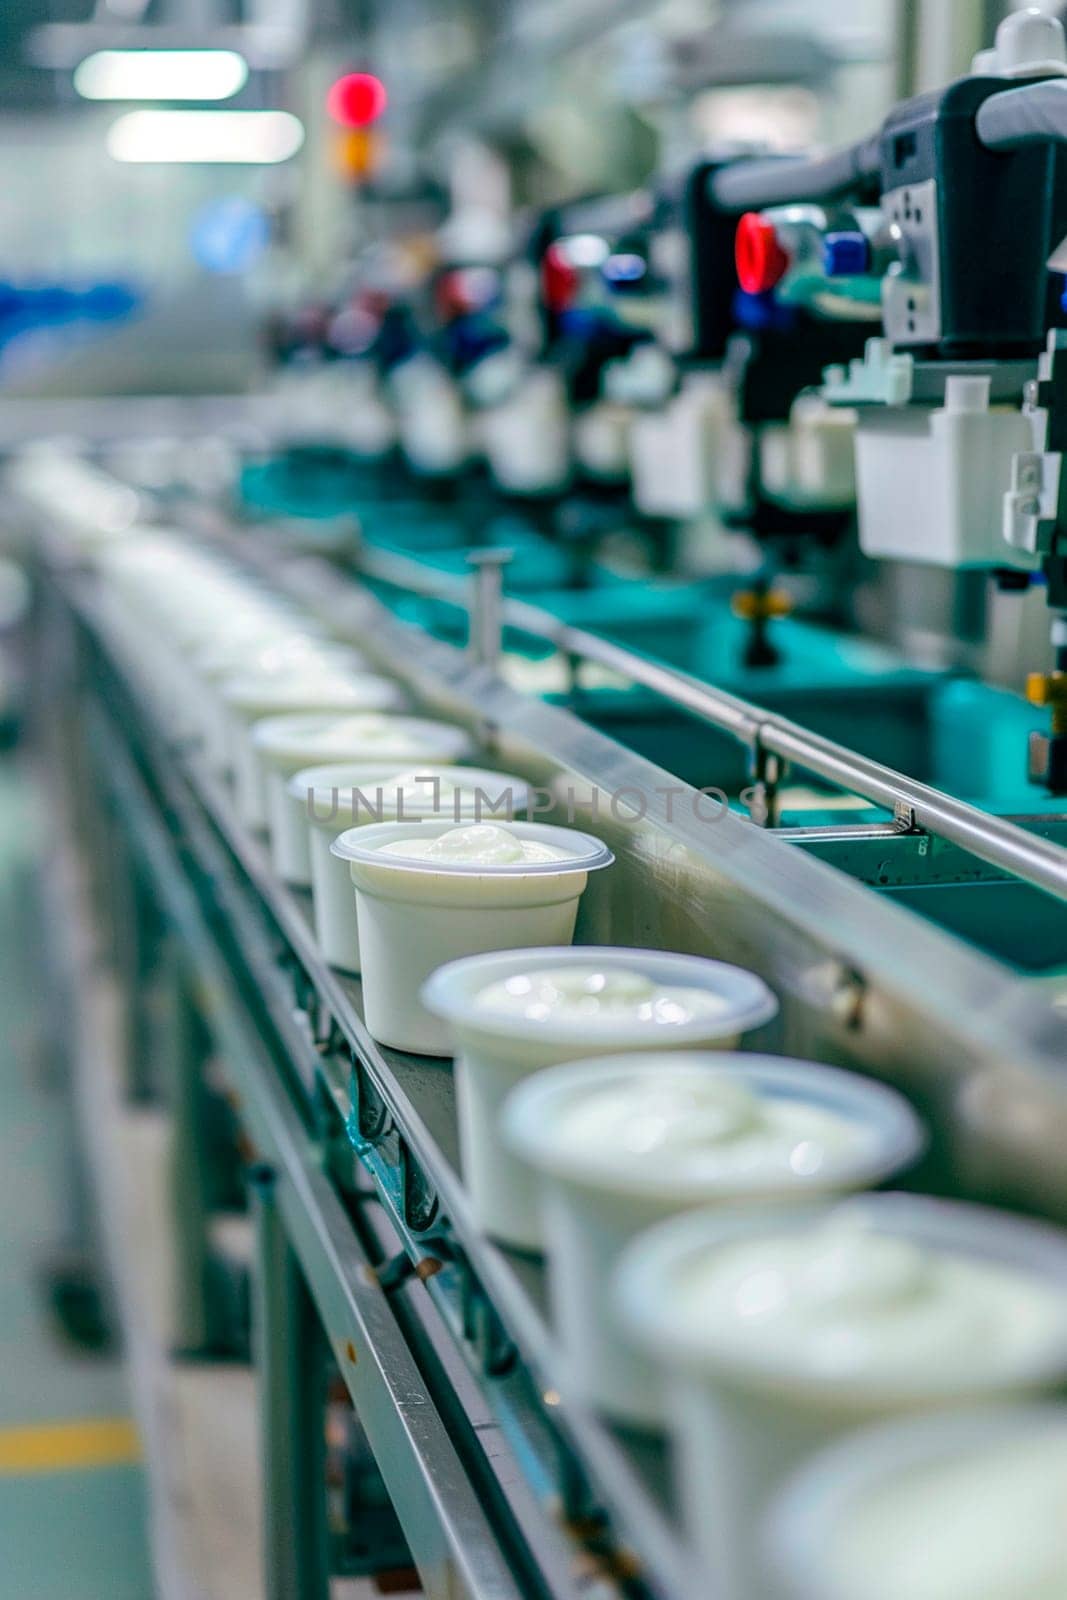 yogurt in the factory industry. selective focus. by yanadjana